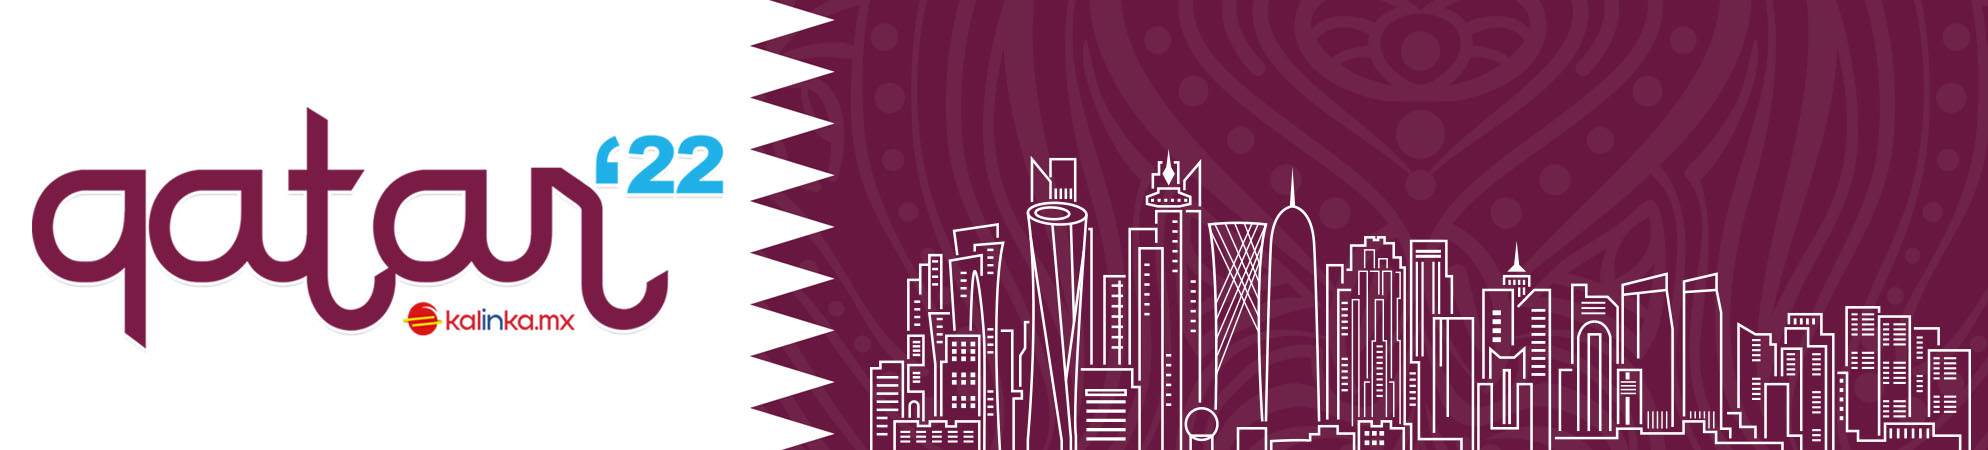 paquetes qatar 2022 -  viajes a qatar 2022 - fifa - fifa - fifa - fifa - fifa - fifa - fifa - fifa - fifa - fifa - fifa - fifa 